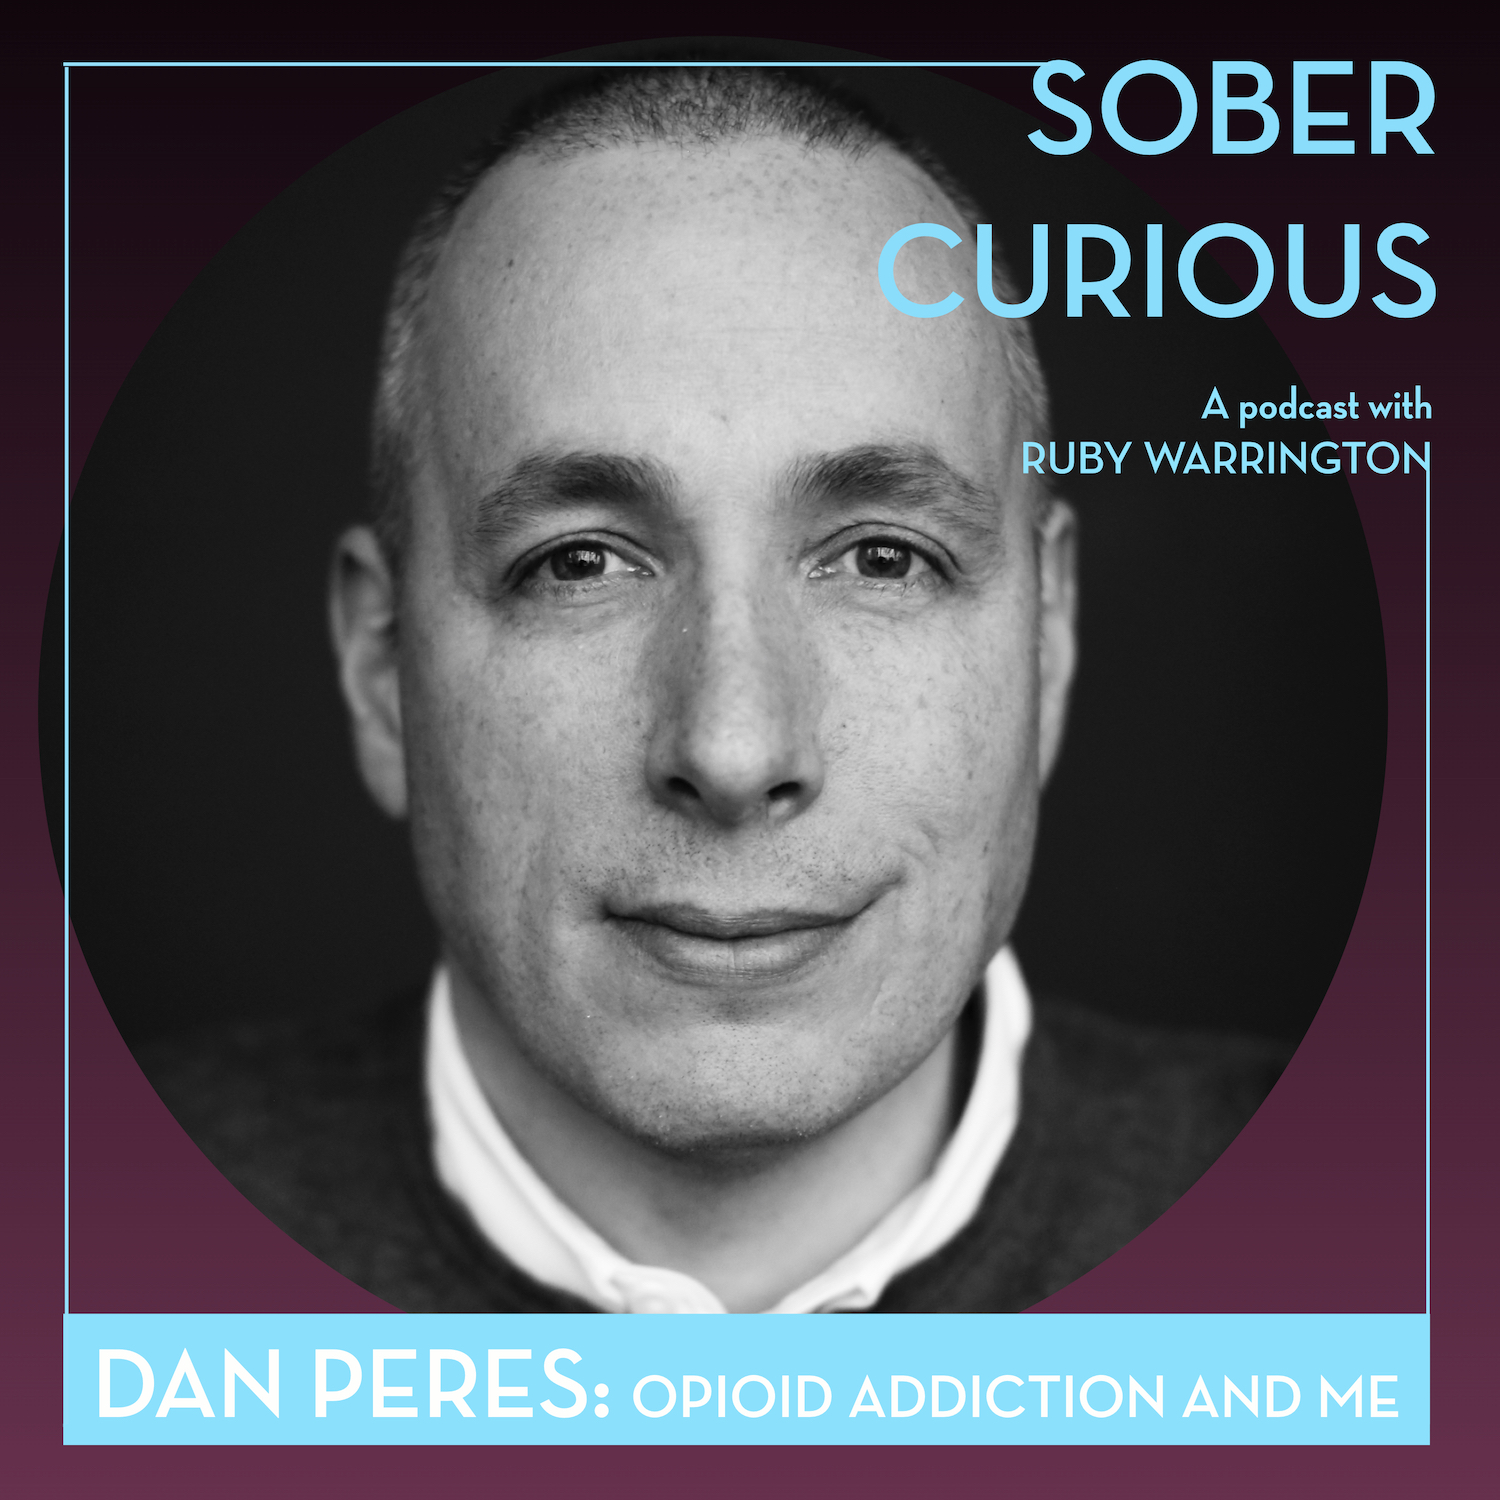 Dan Peres Sober Curious Podcast Ruby Warrington